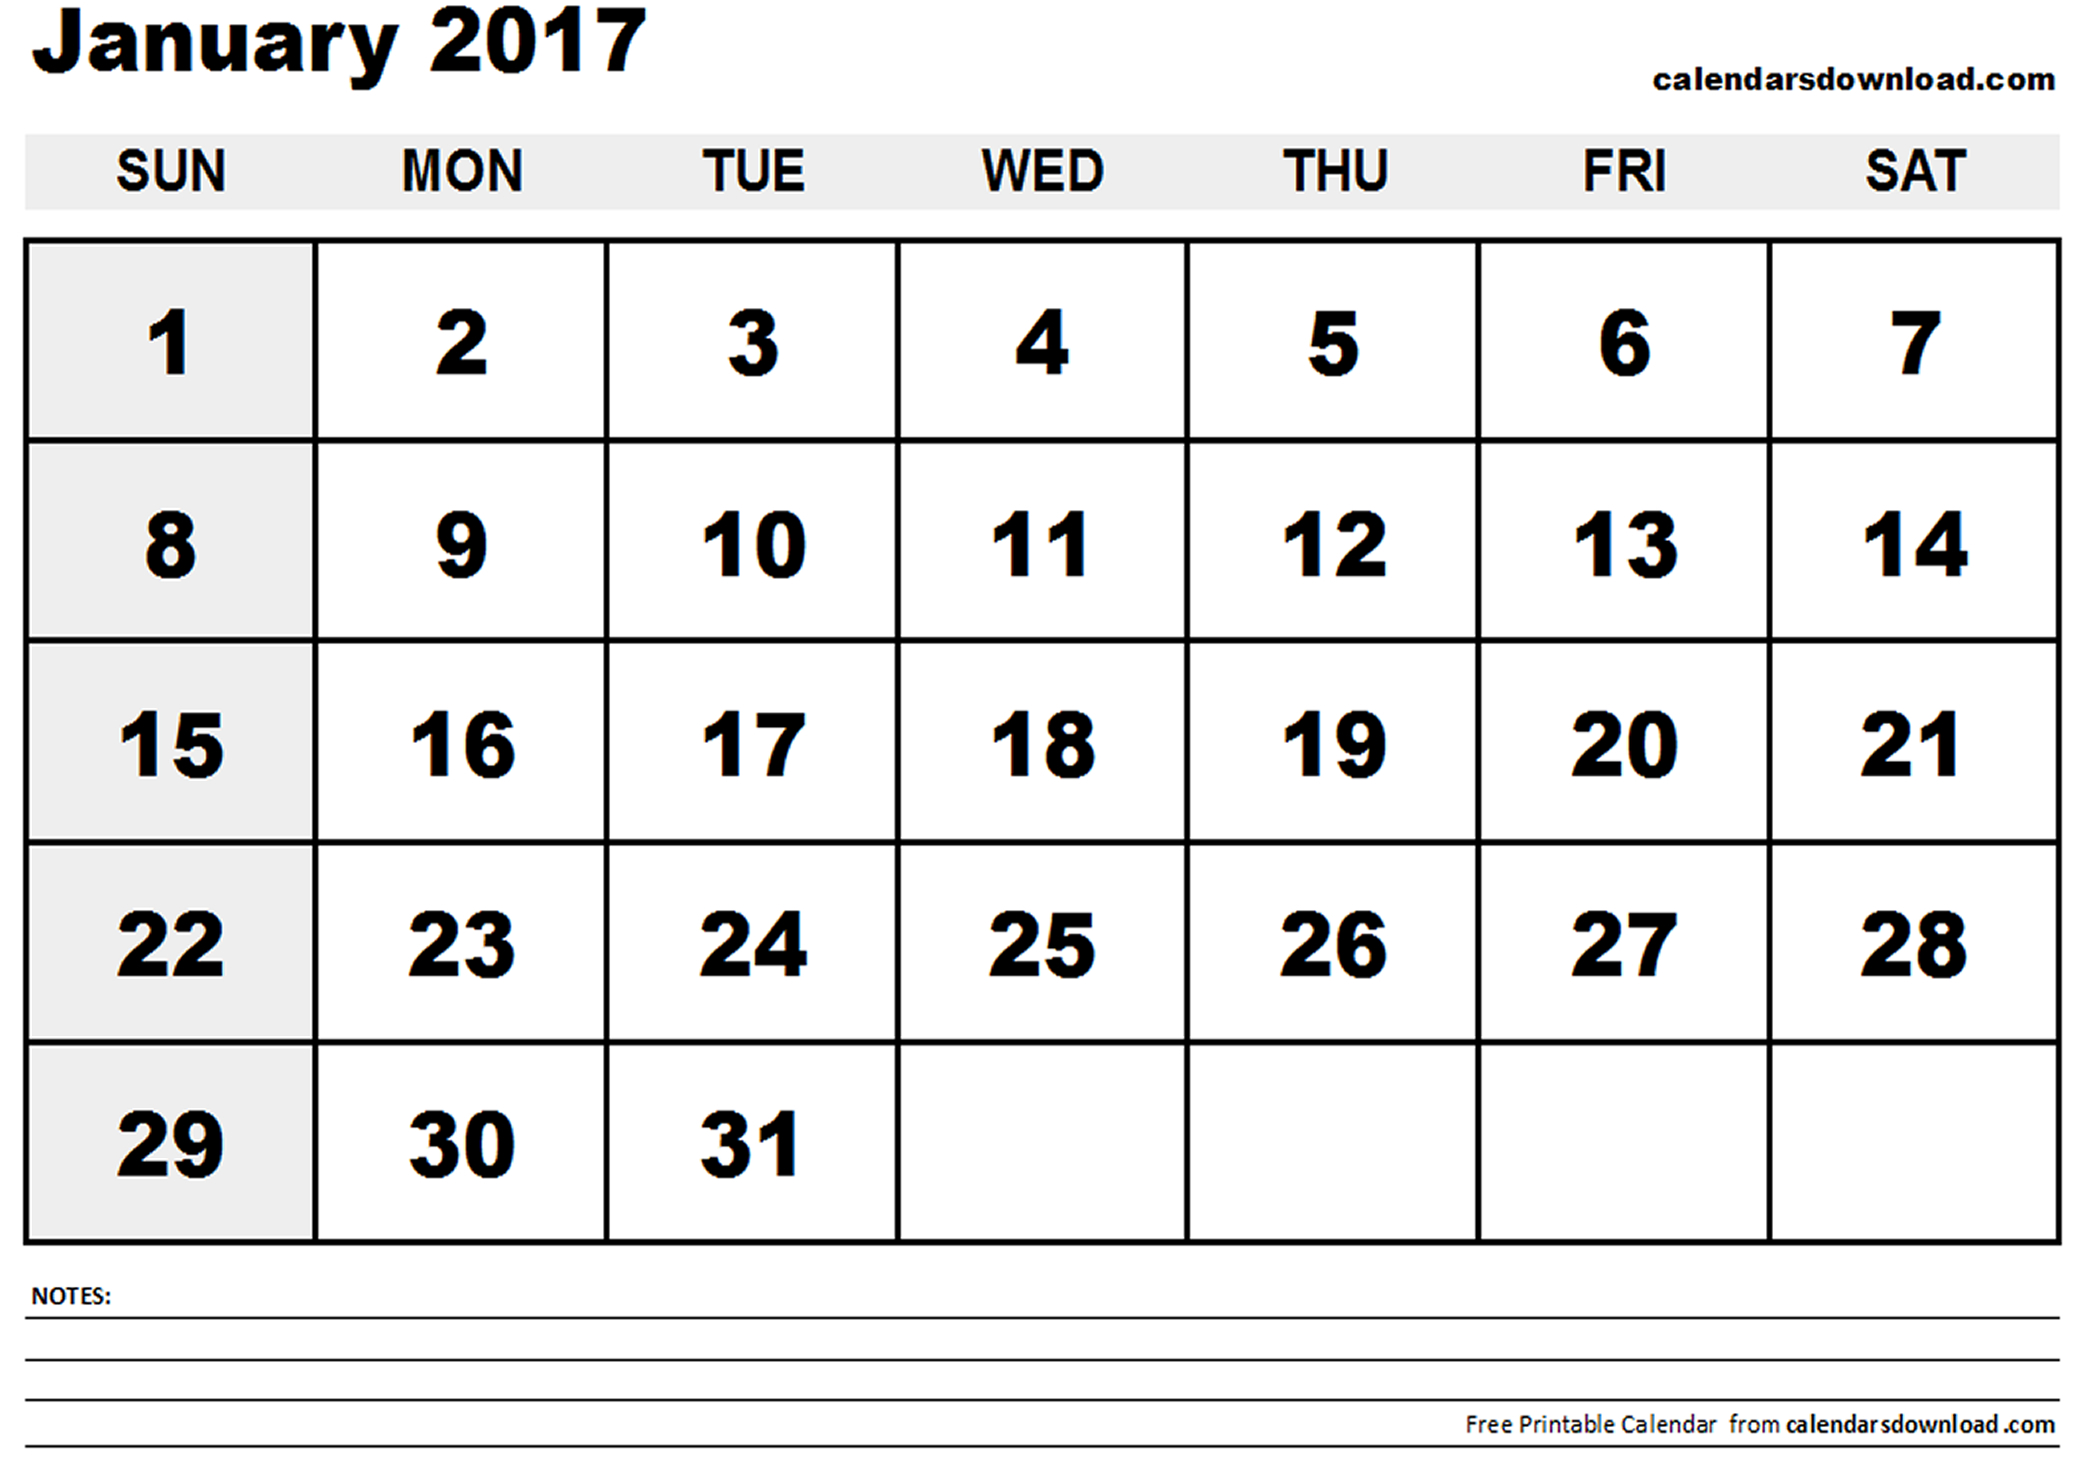 clipart january 2017 calendars - Clipground